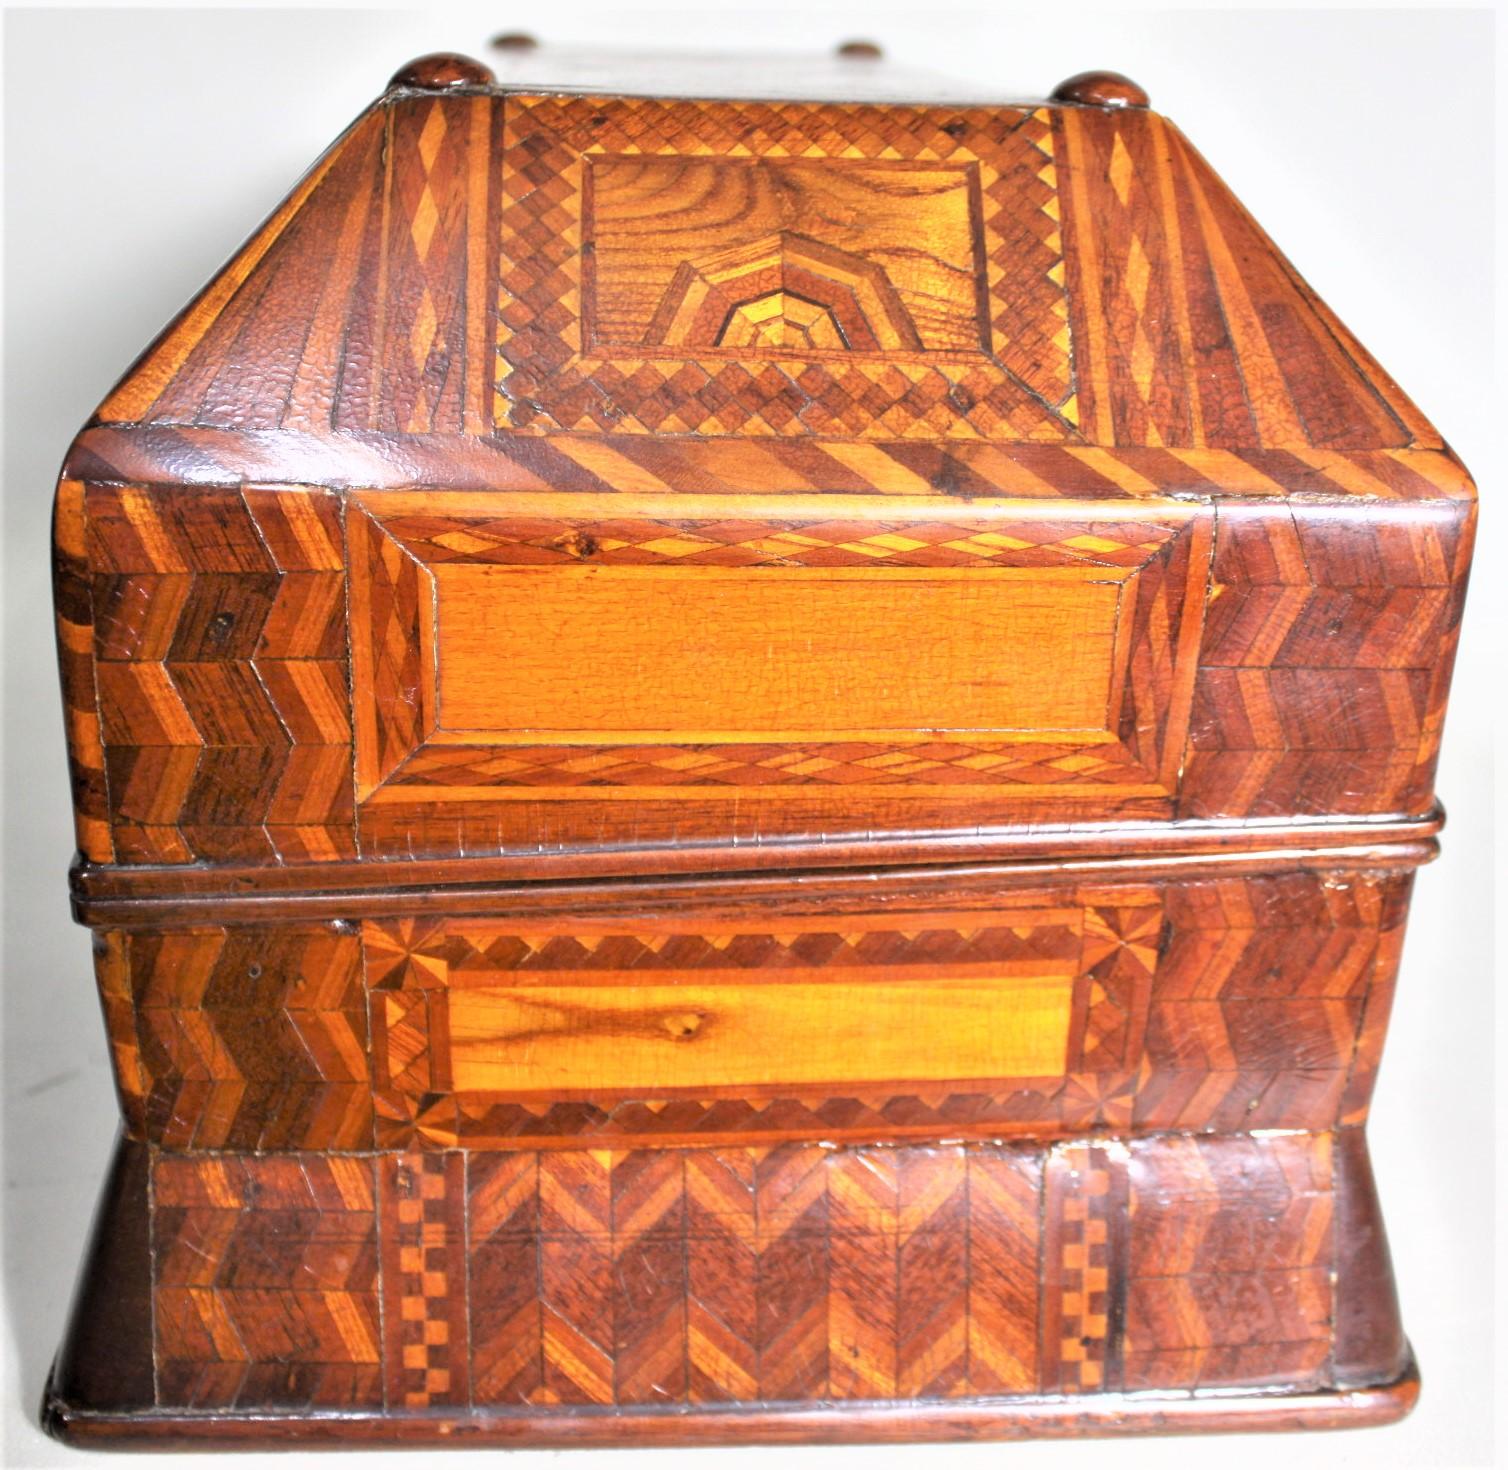 Superb Antique Folk Art Parquetry Casket Styled Writing Box or Lap Desk For Sale 11